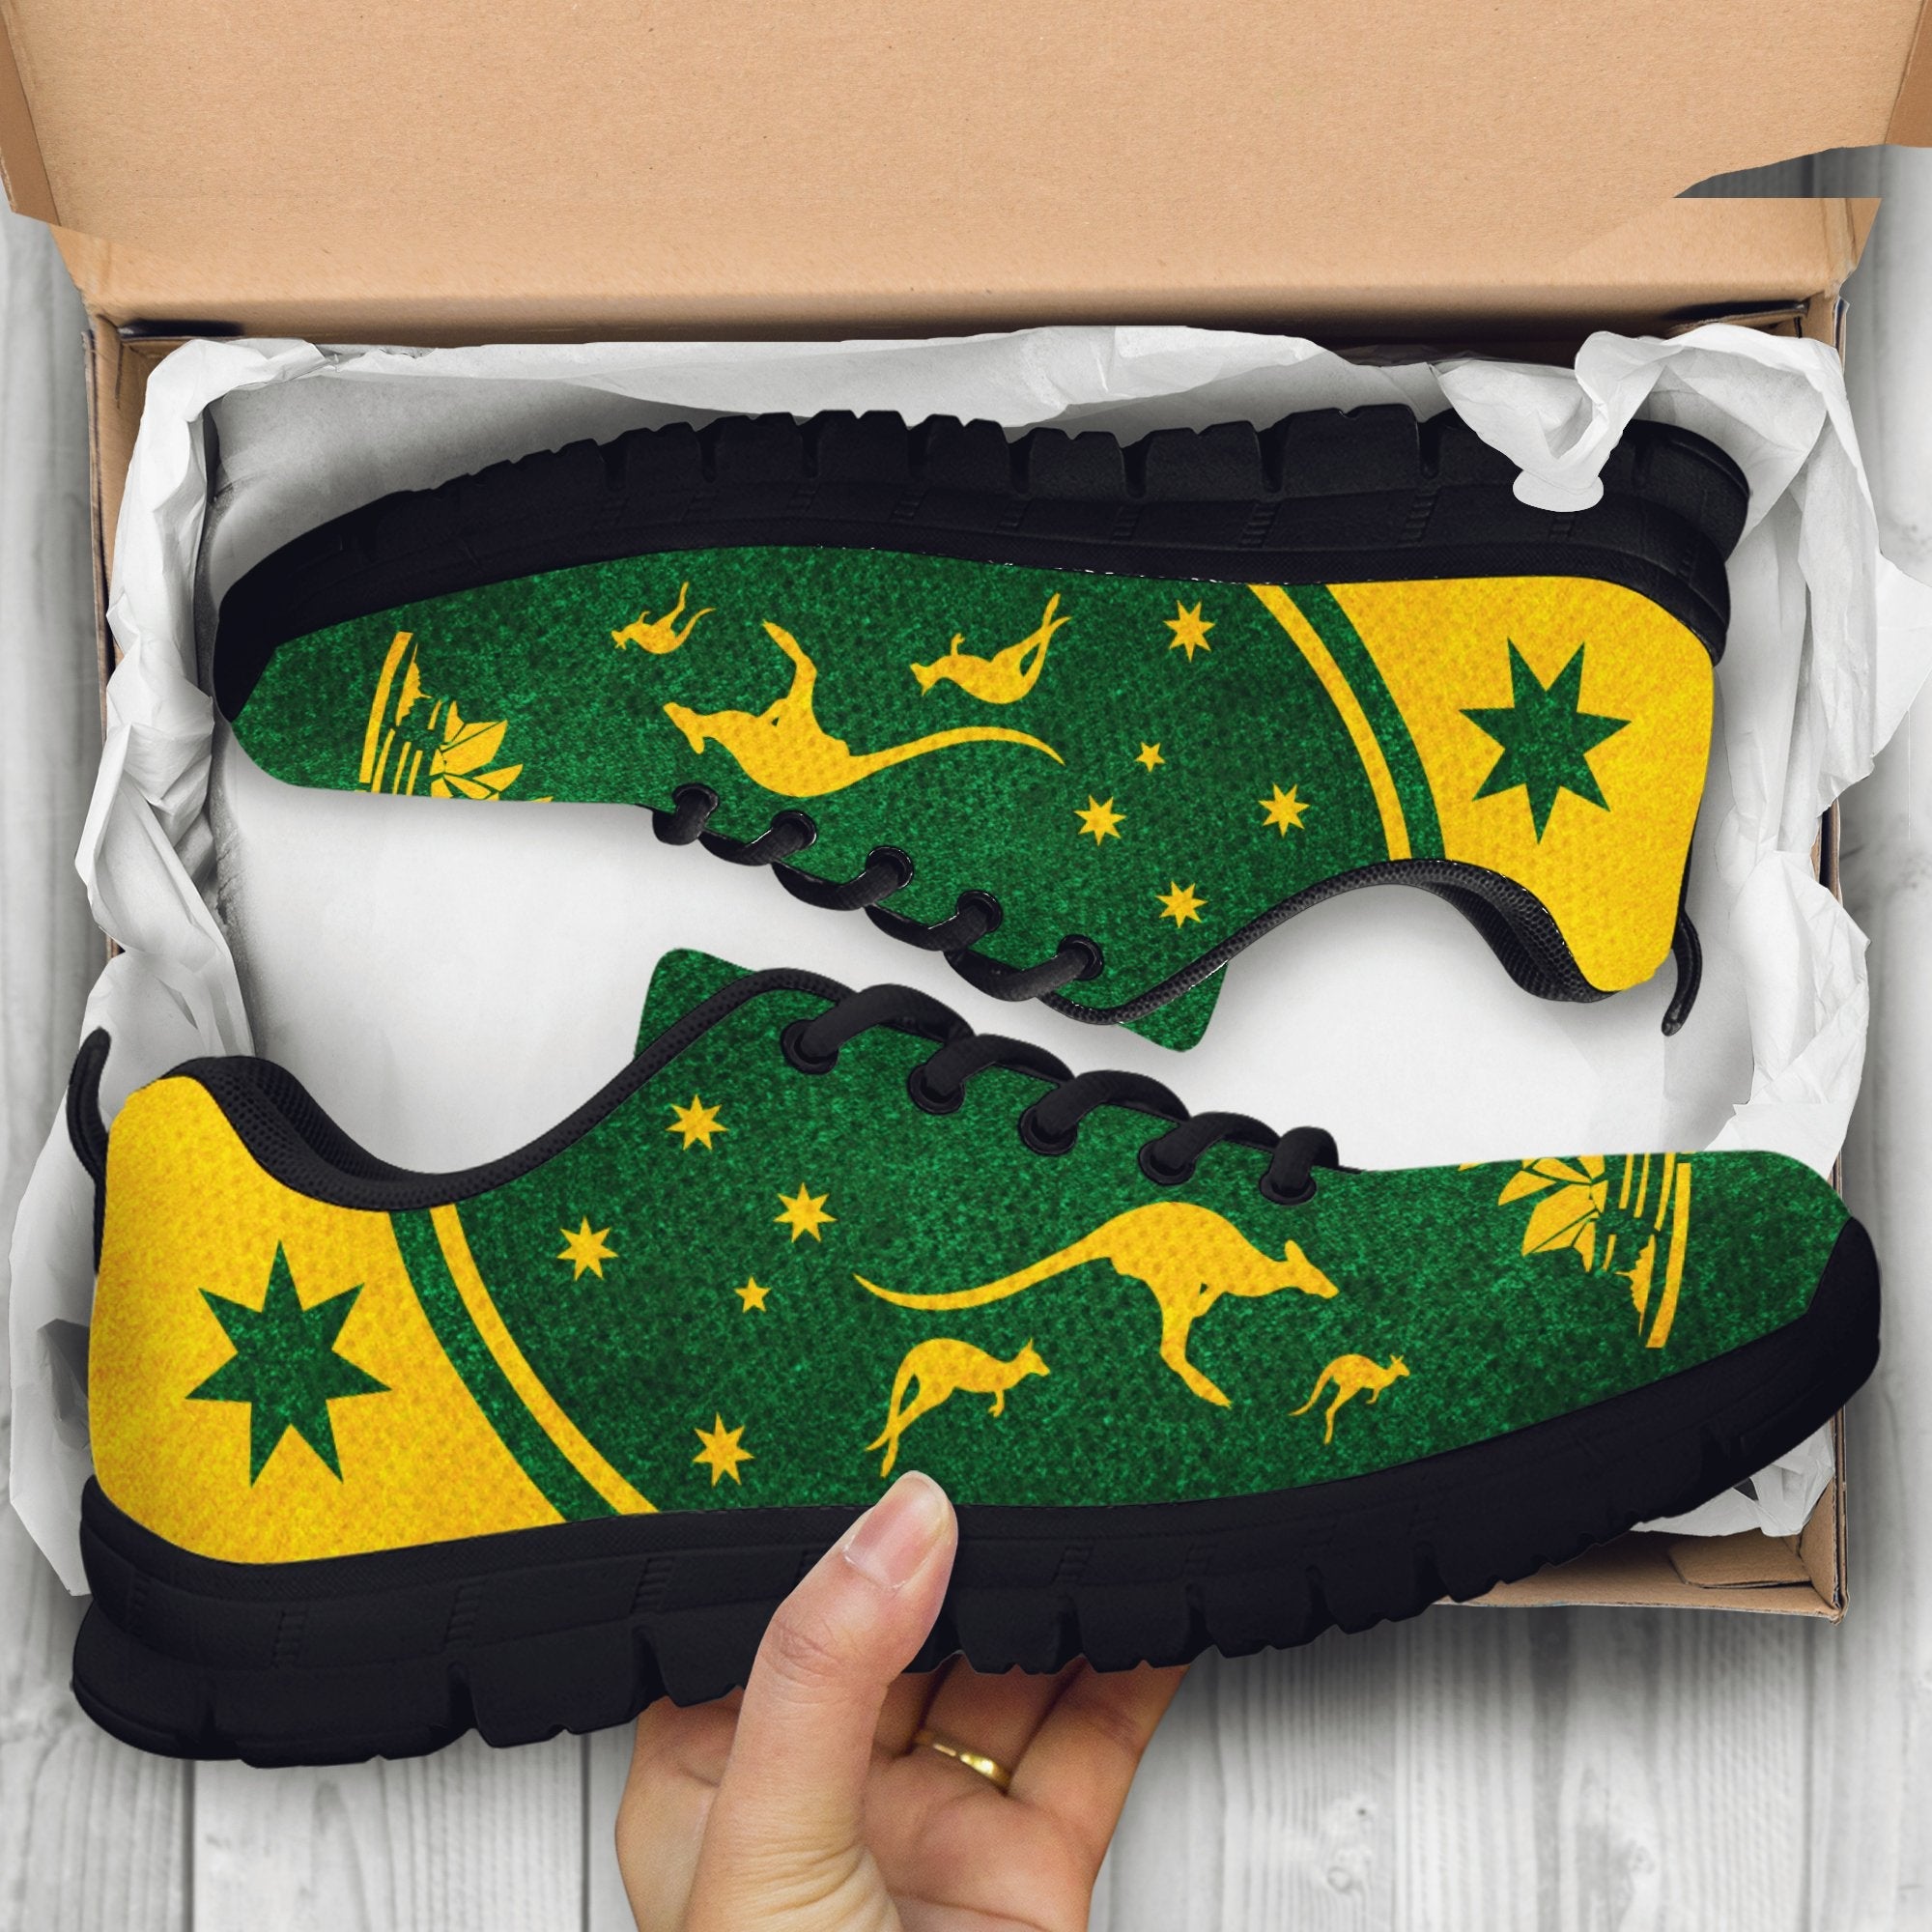 sneakers-kangaroo-shoes-sydney-opera-australia-color